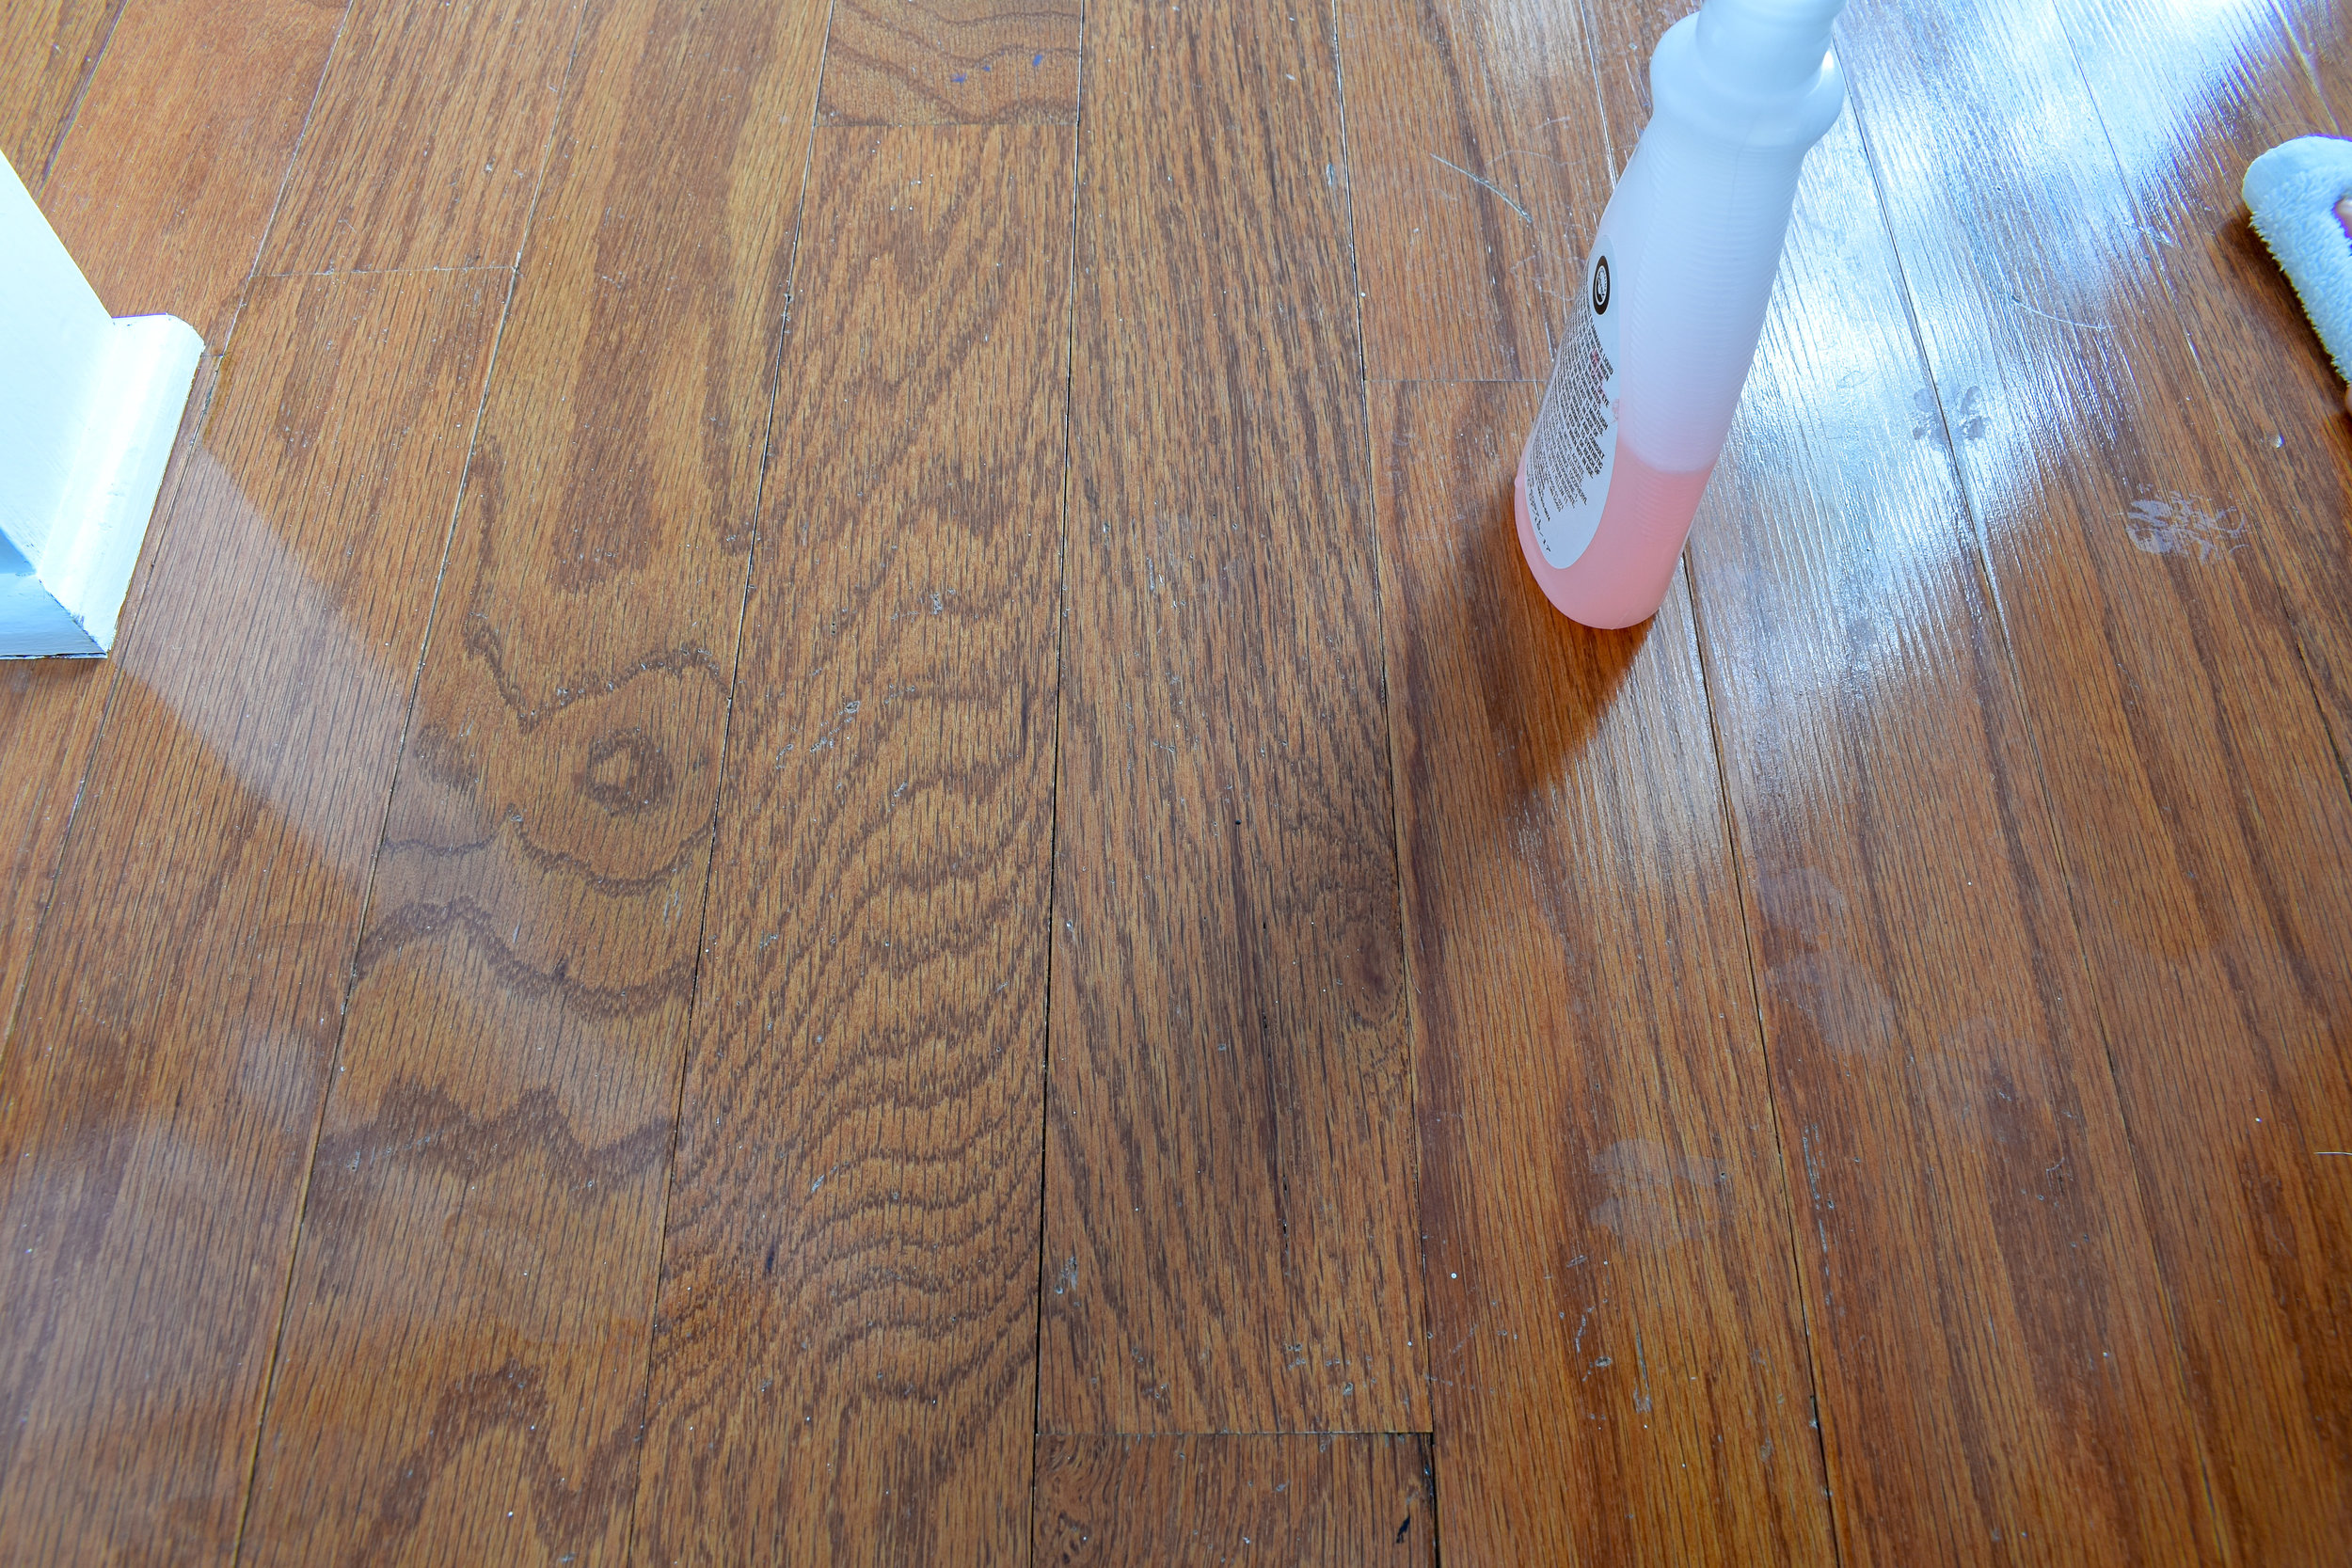 How To Make Old Hardwood Floors Shine, How To Get Hardwood Floors Shiny